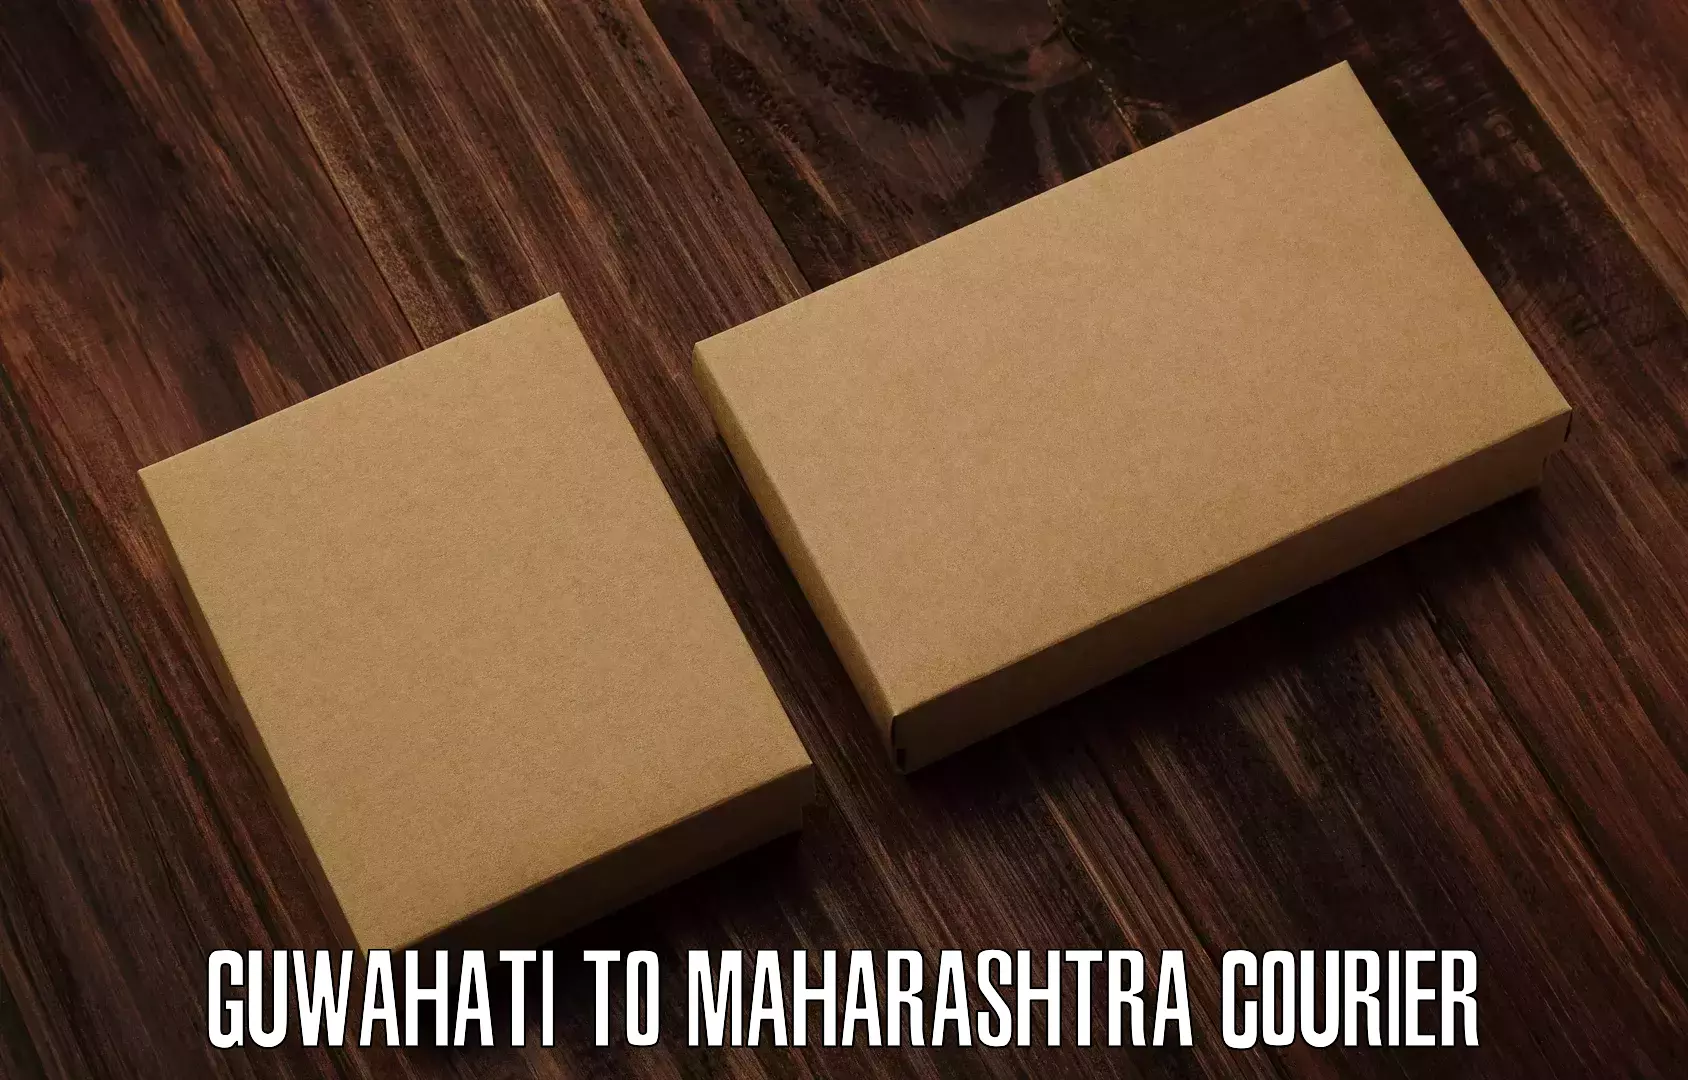 User-friendly courier app Guwahati to Maharashtra